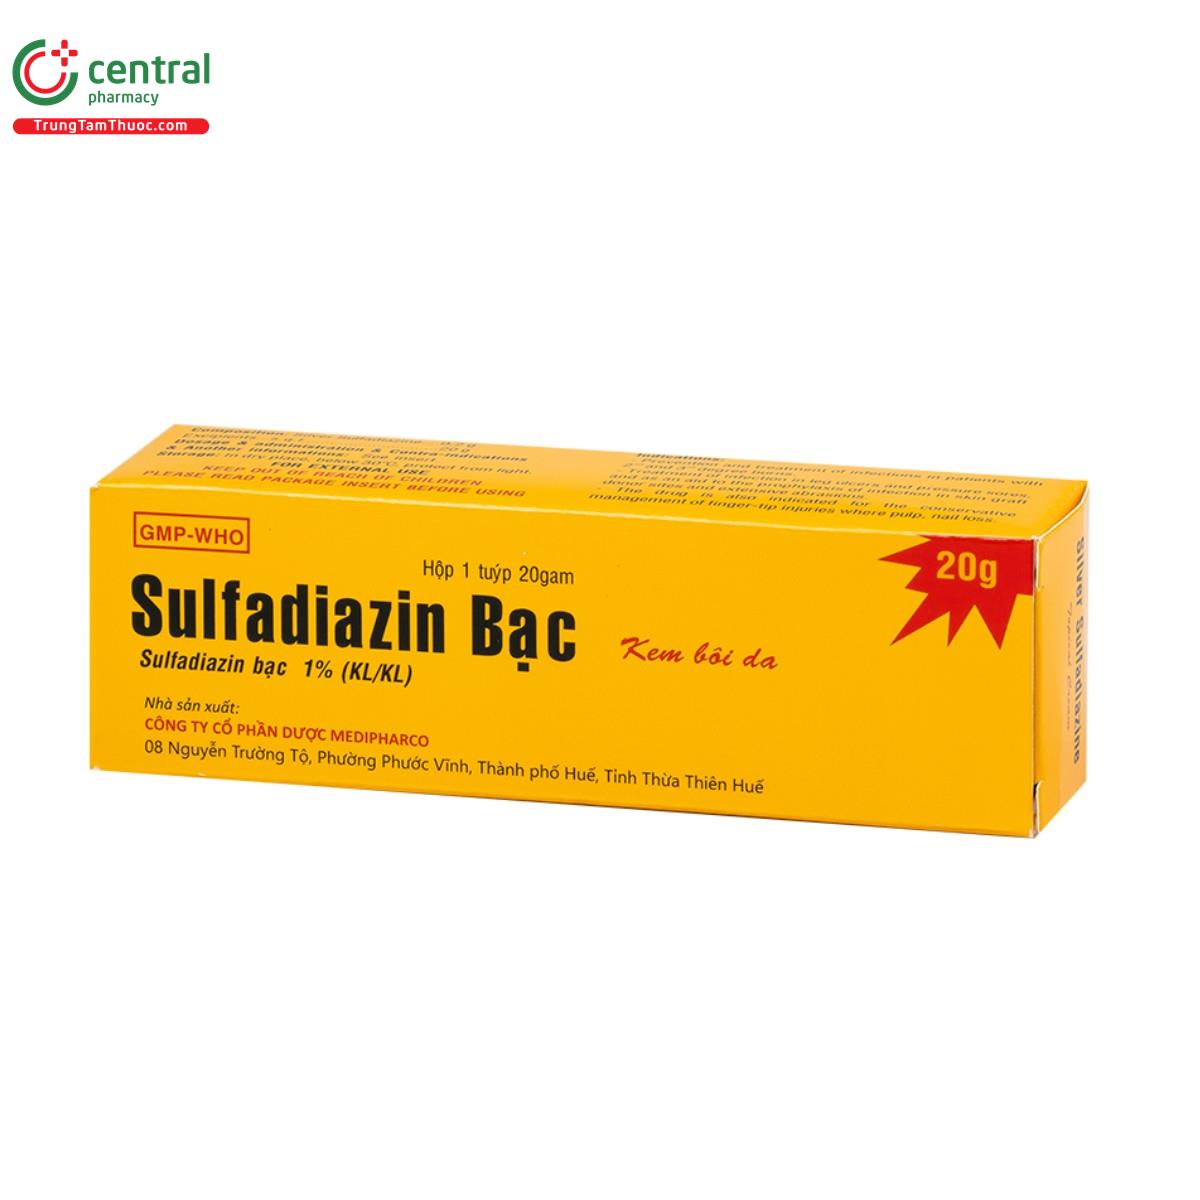 sulfadiazin bac medipharco 3 L4724